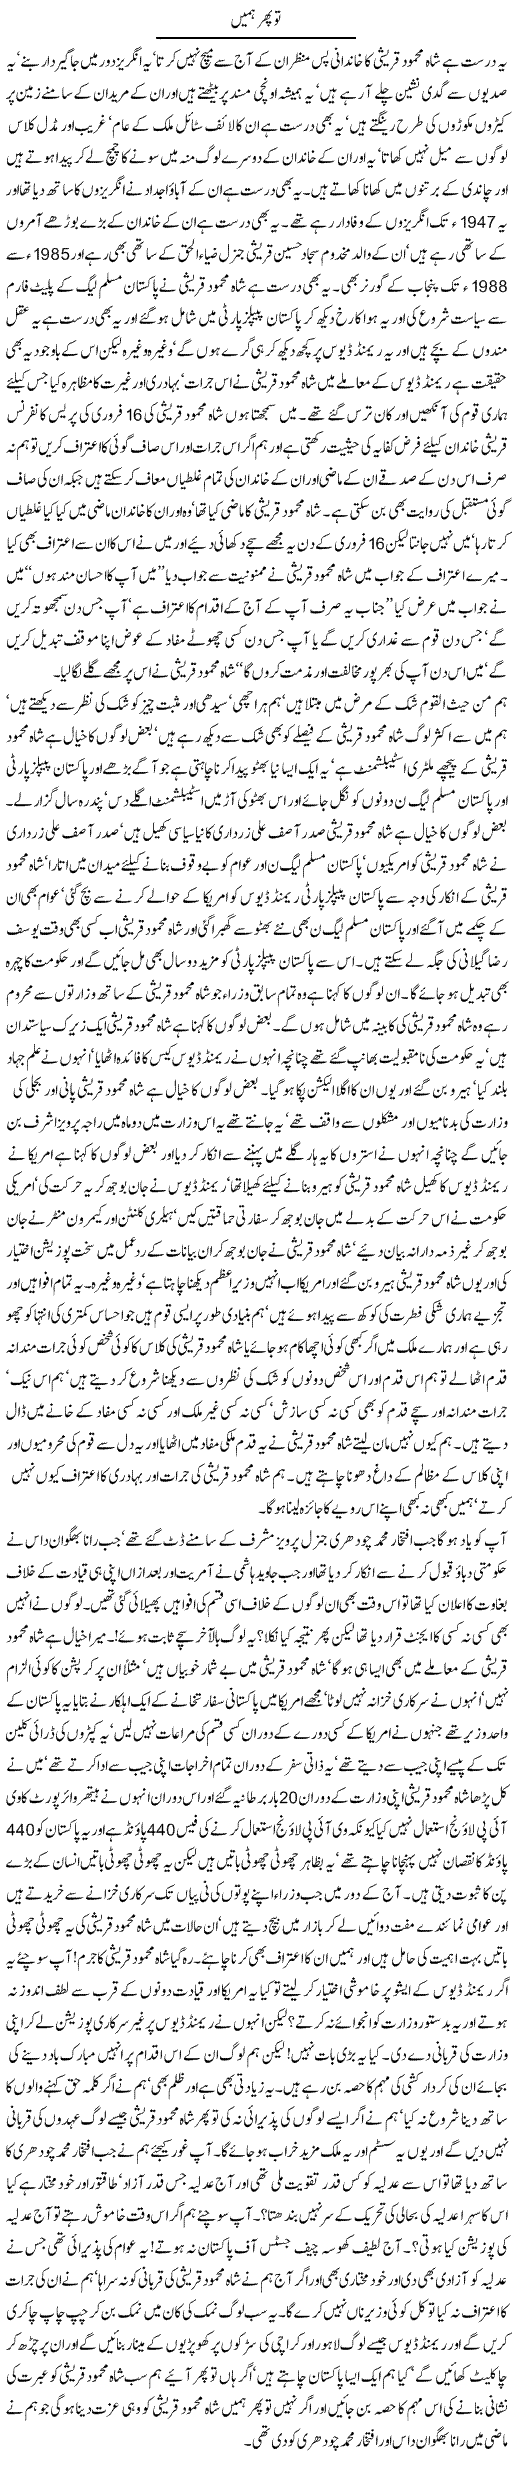 Shah Mehmood Qureshi Express Column Javed Chaudhry 22 February 2011